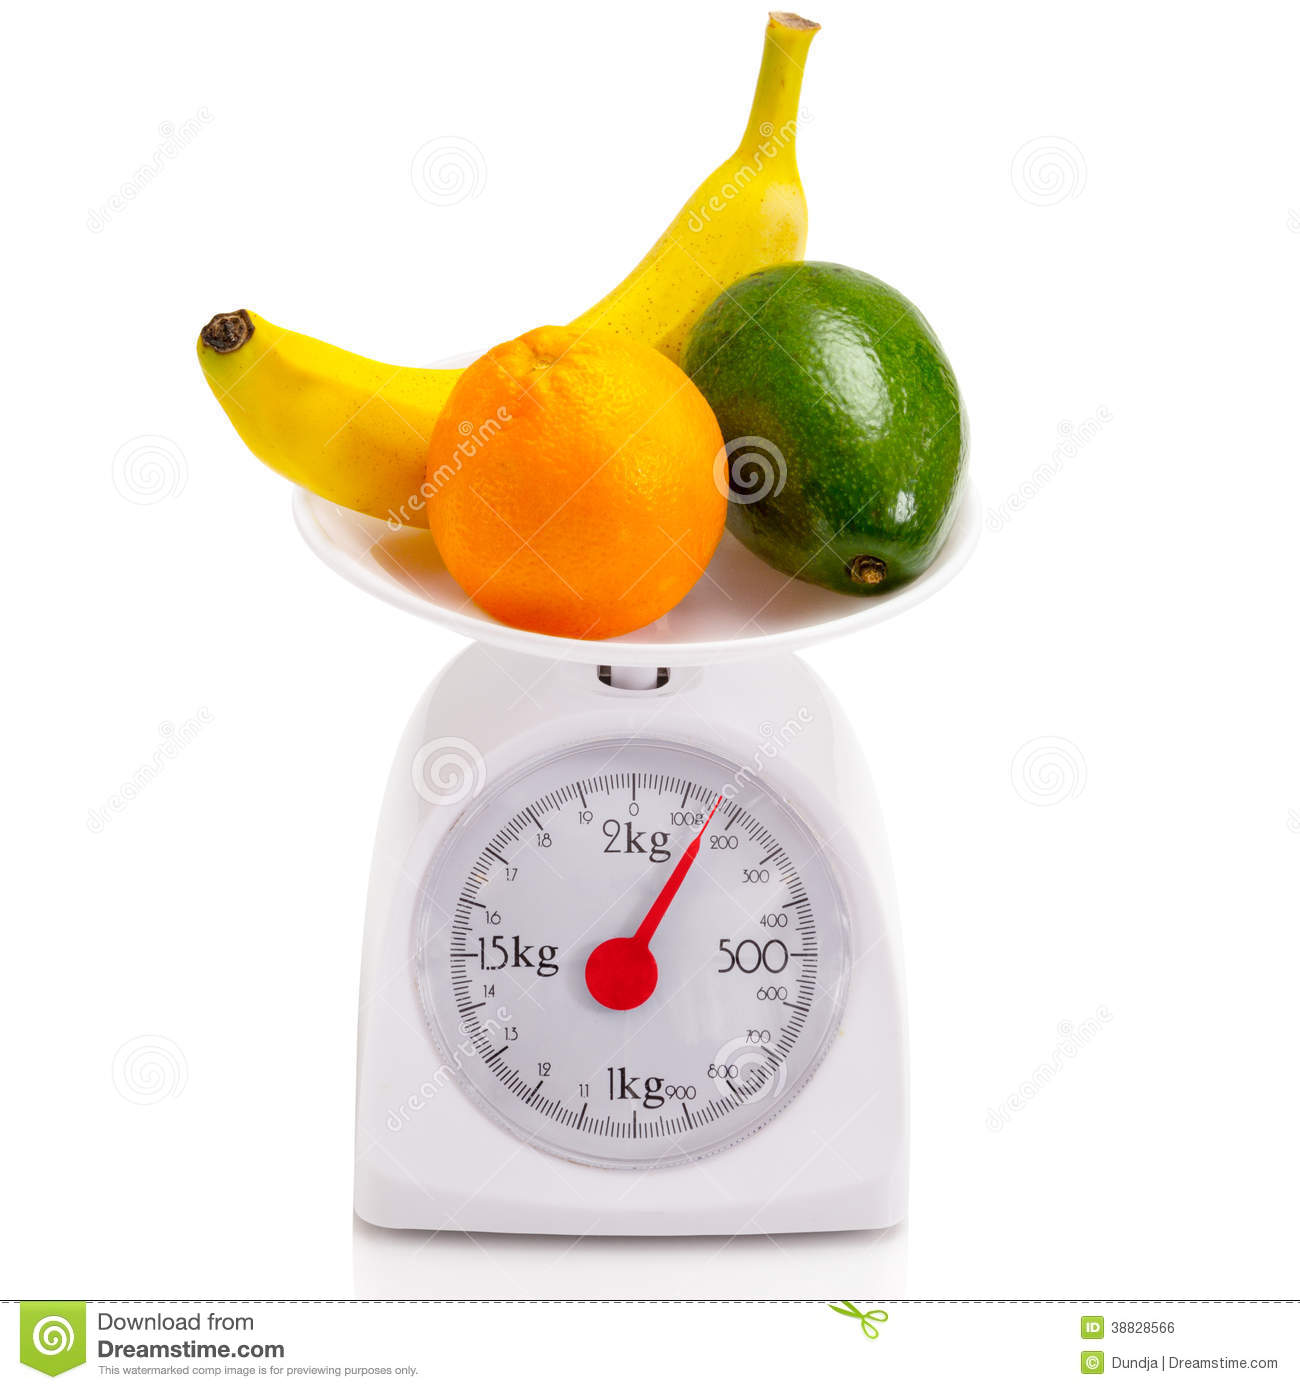 Healthy Food On Balance Scale Stock Photo   Image  38828566